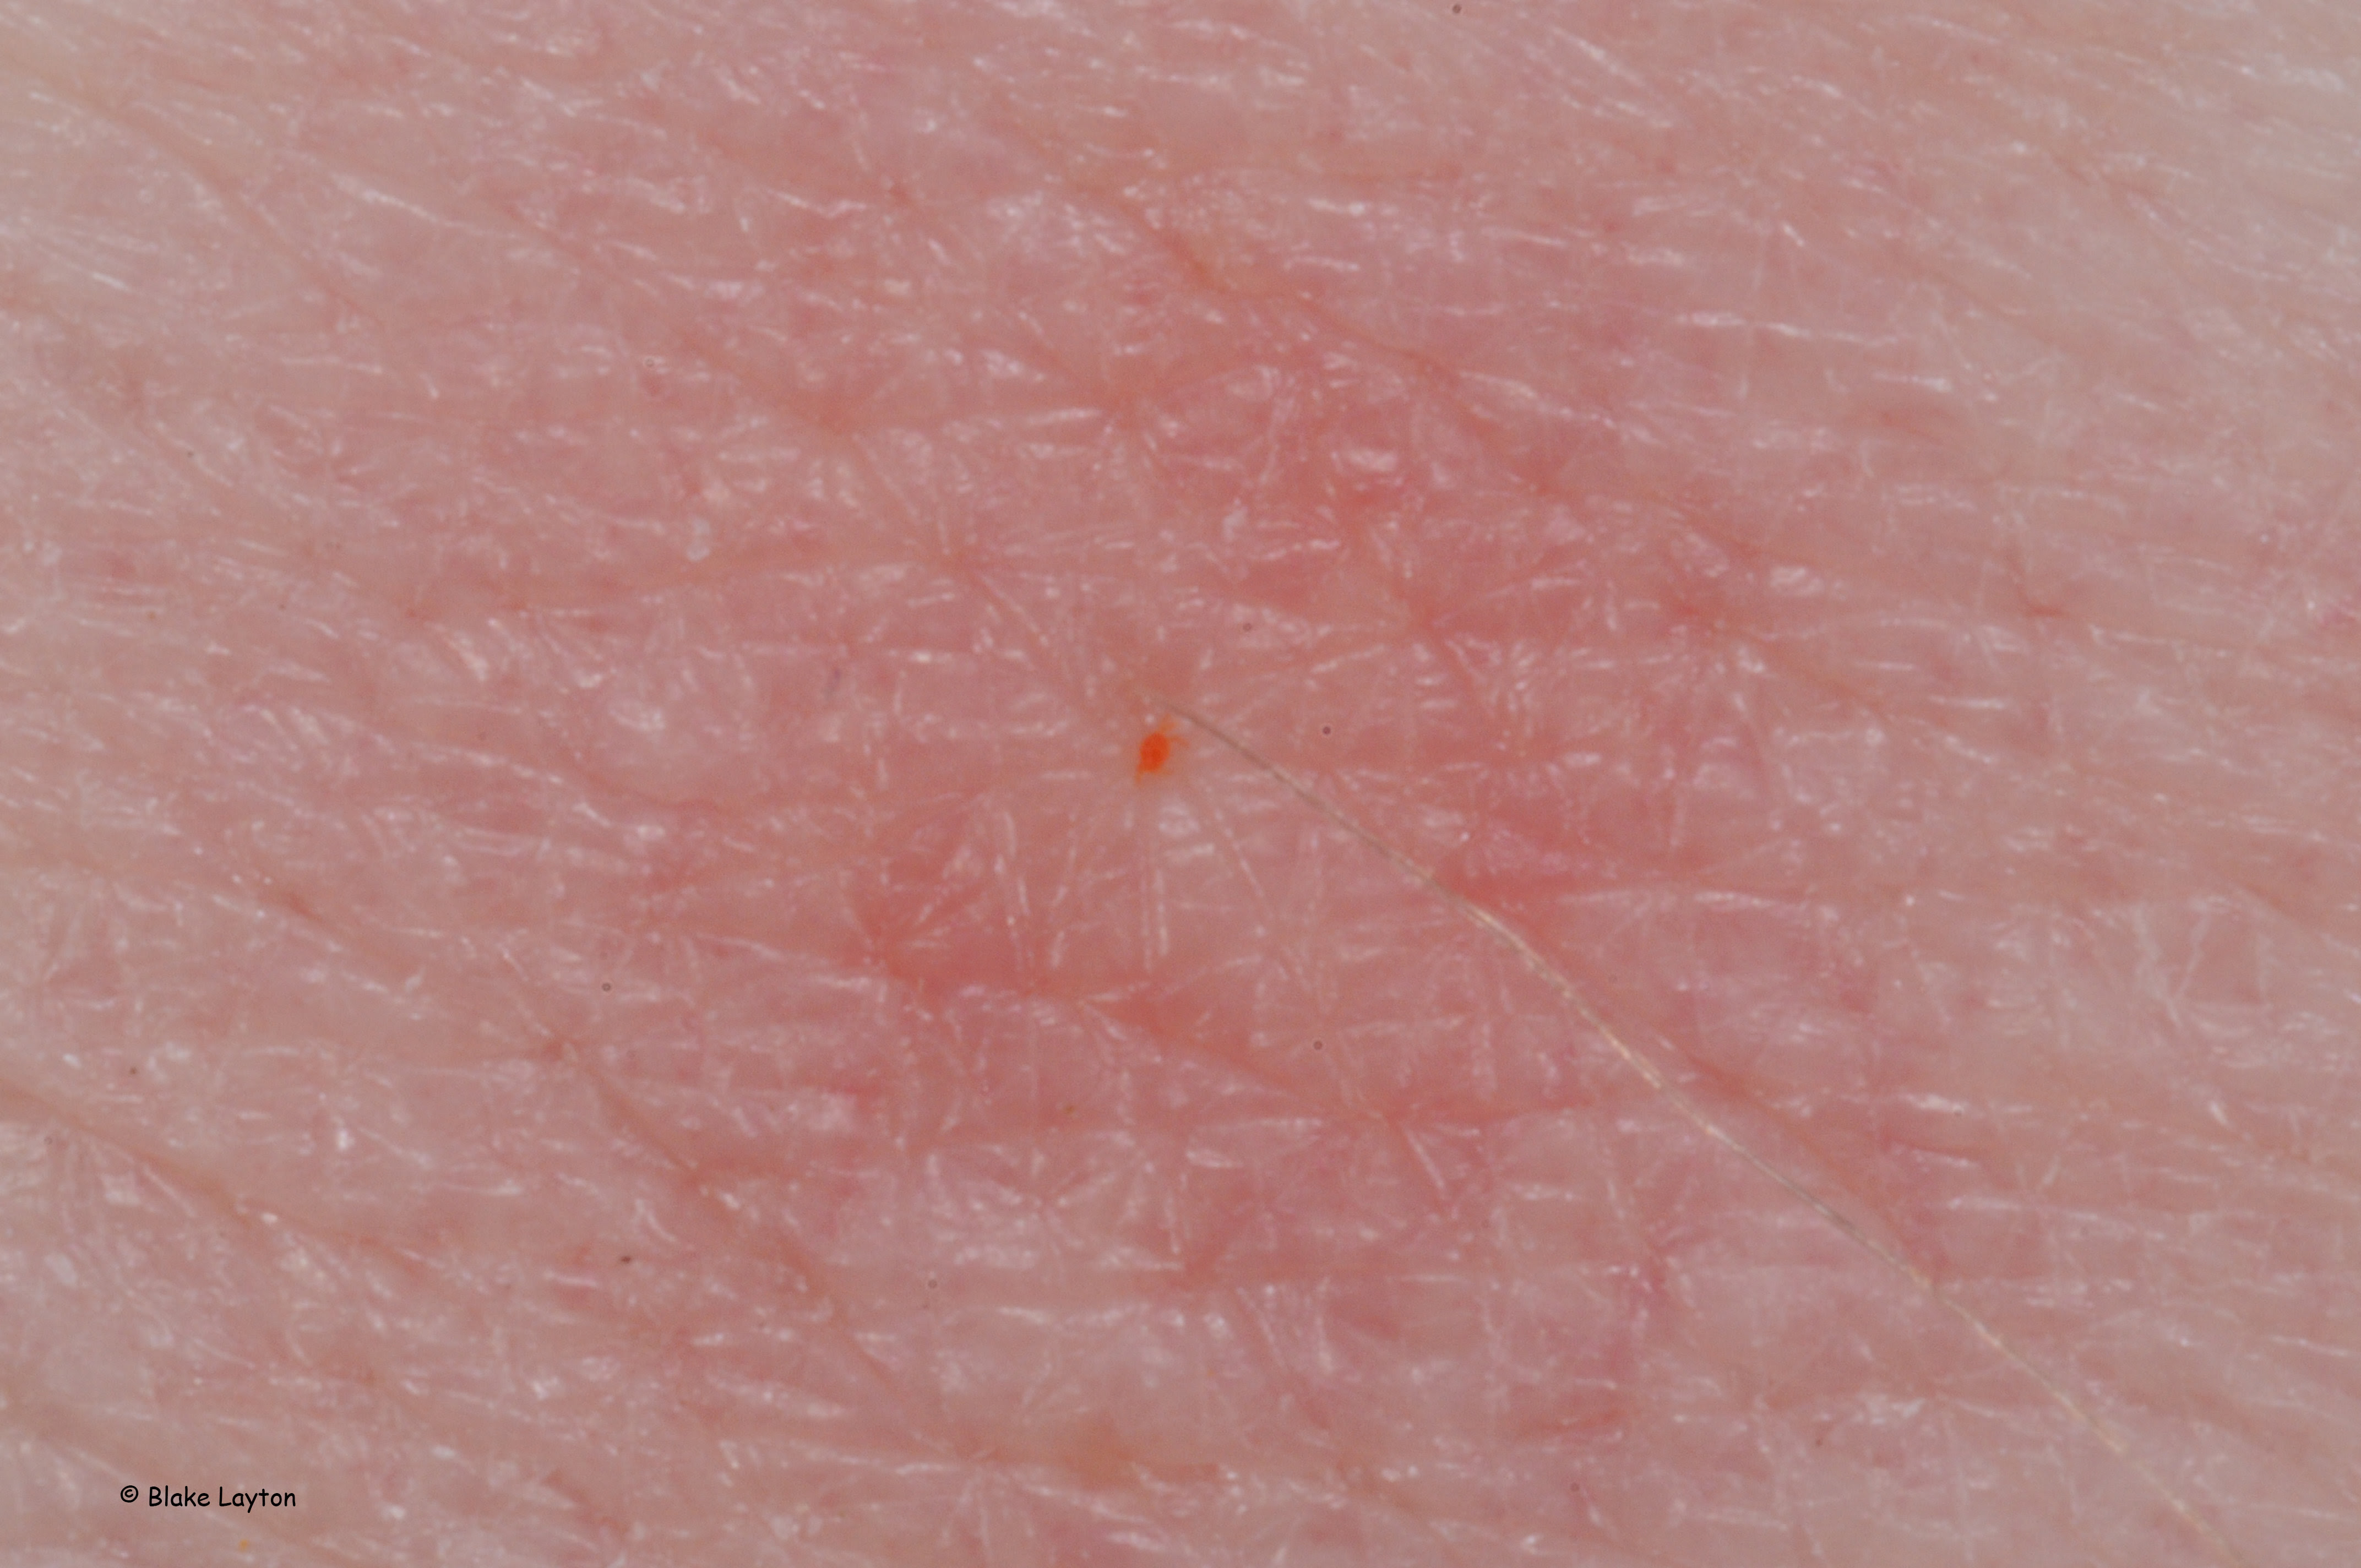 azathioprine pinpoint red spots on skin